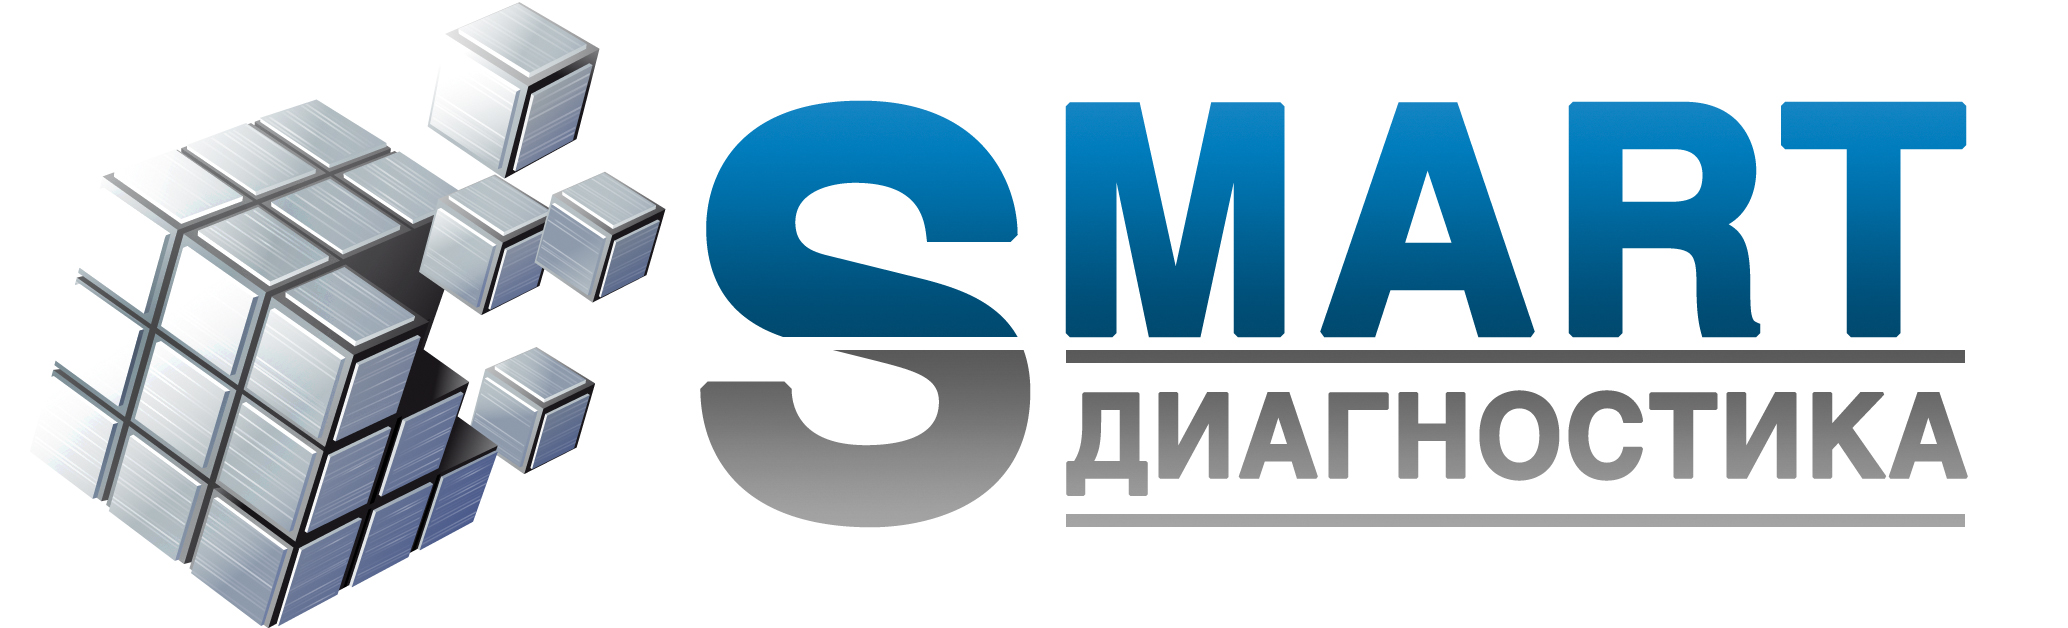 smartmrt_logo_big.jpg